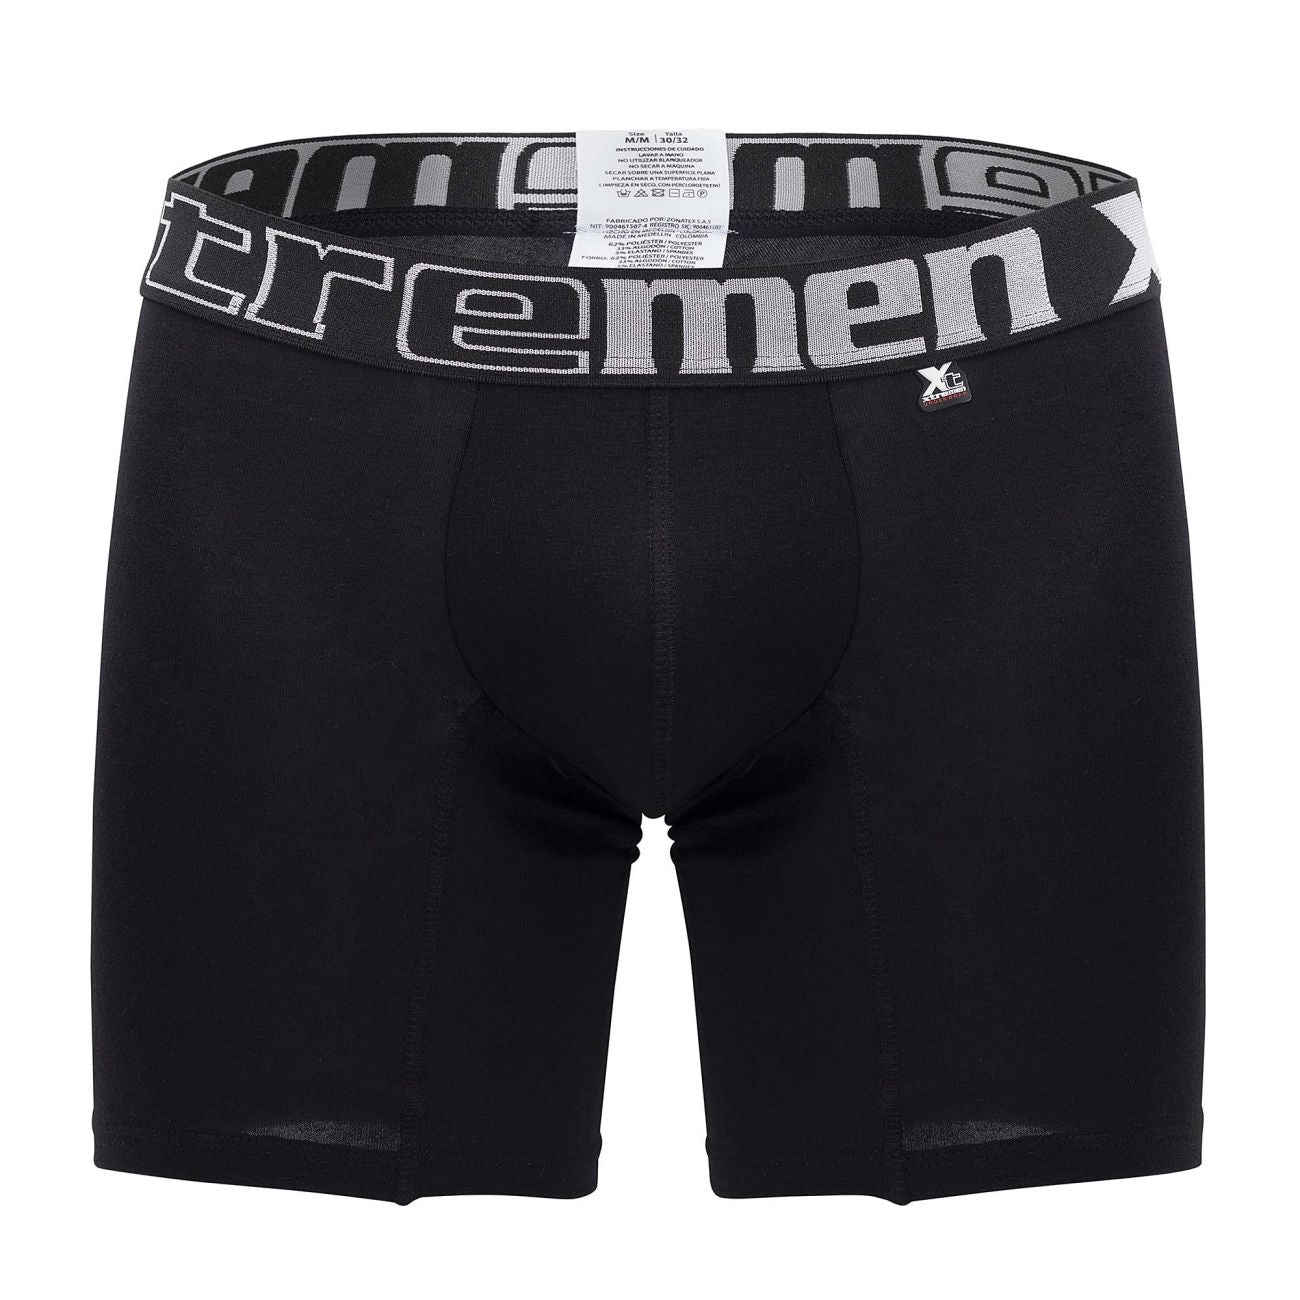 Xtremen 70001 Essential Boxer Black Plus Sizes